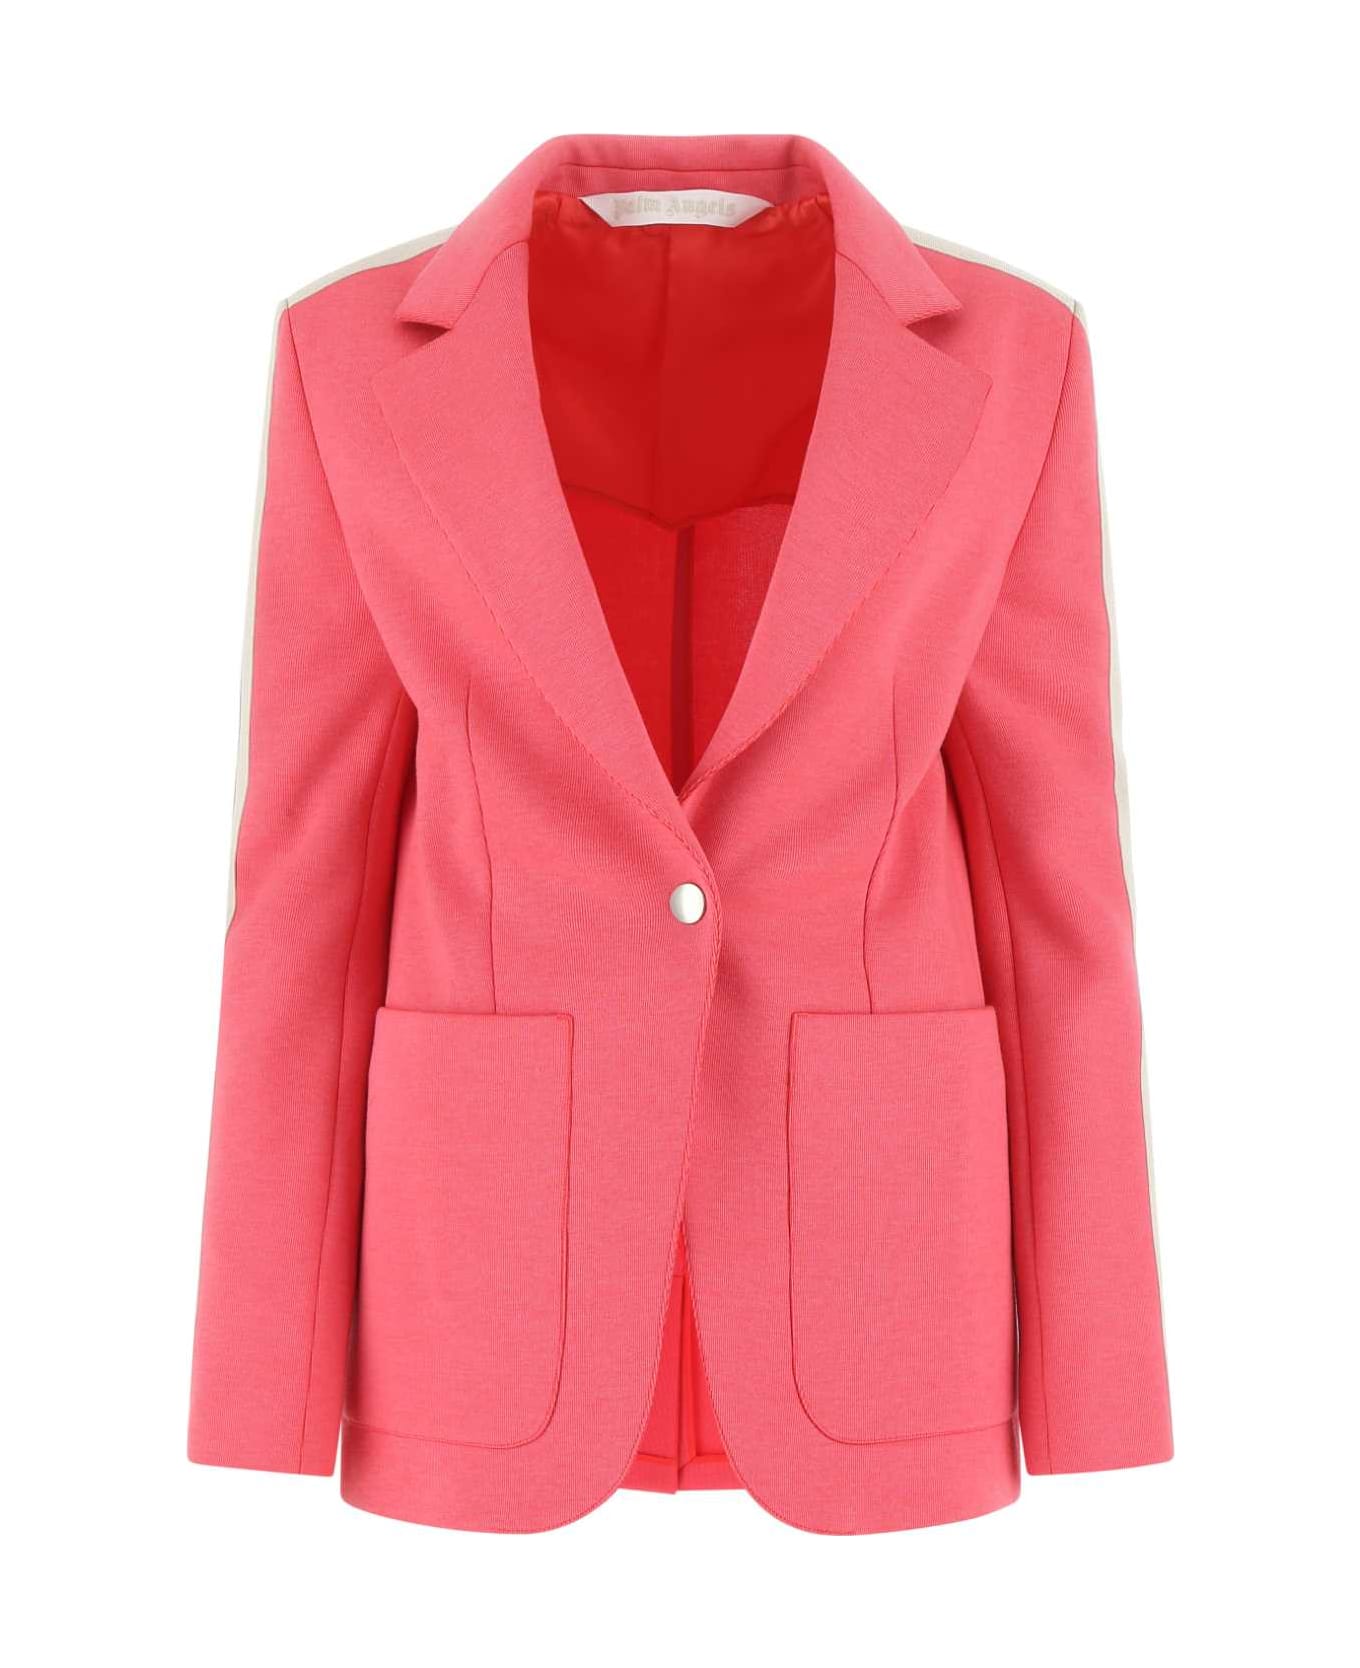 Palm Angels Pink Cotton Blend Jacket - 3201